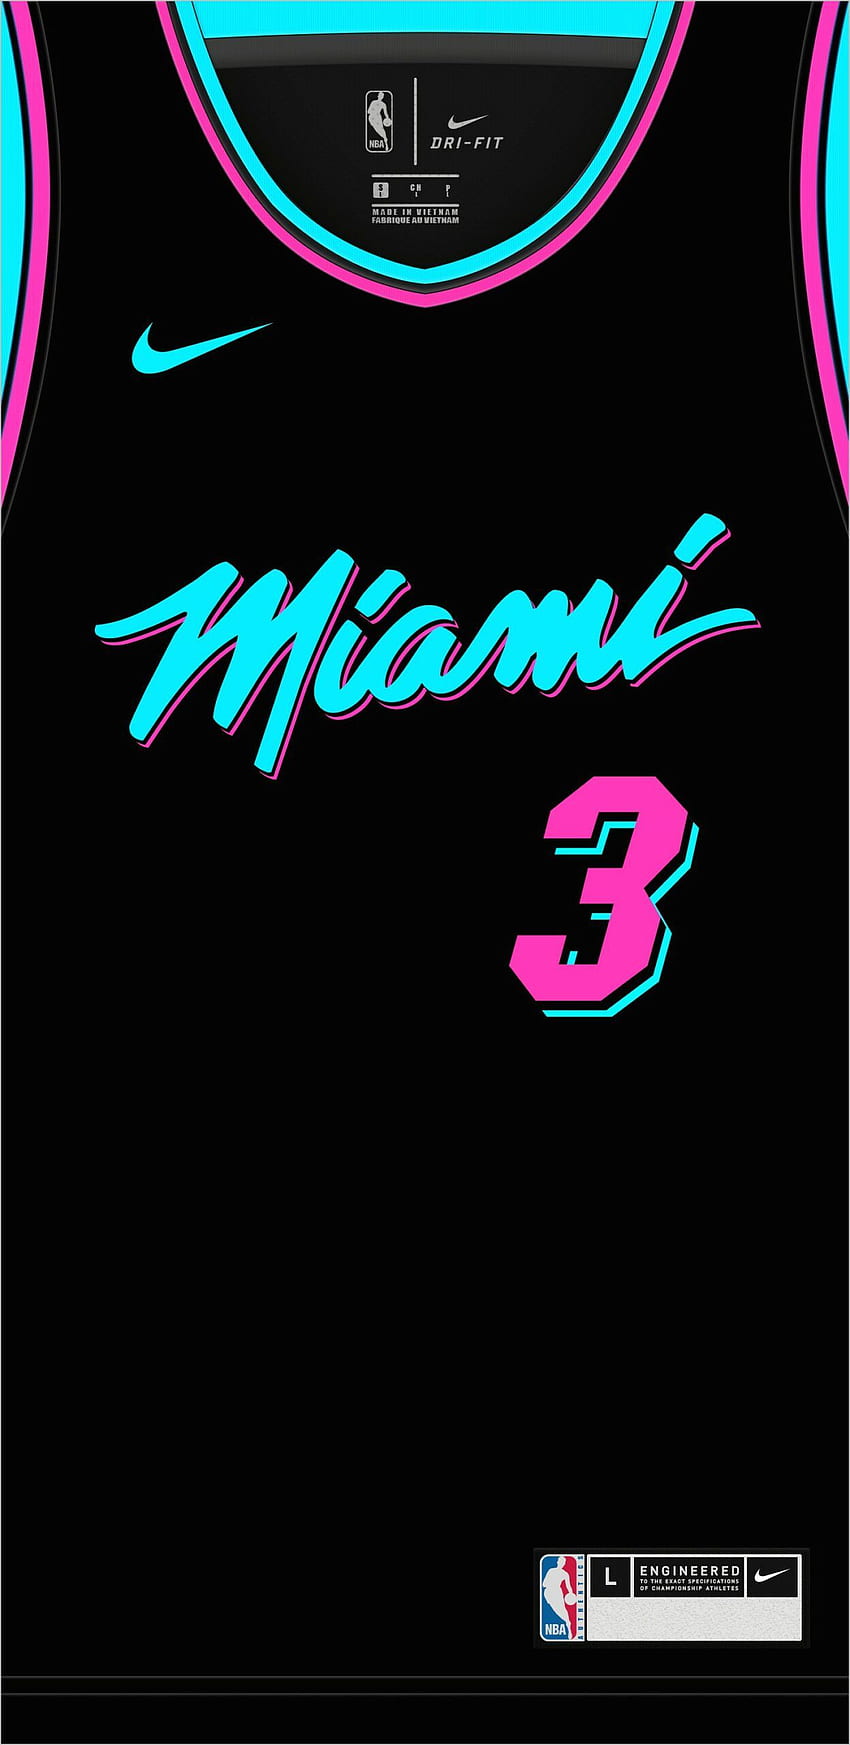 Nba Miami Vice w 2020. Nba miami heat, Nba, Miami heat koszykówka Tapeta na telefon HD